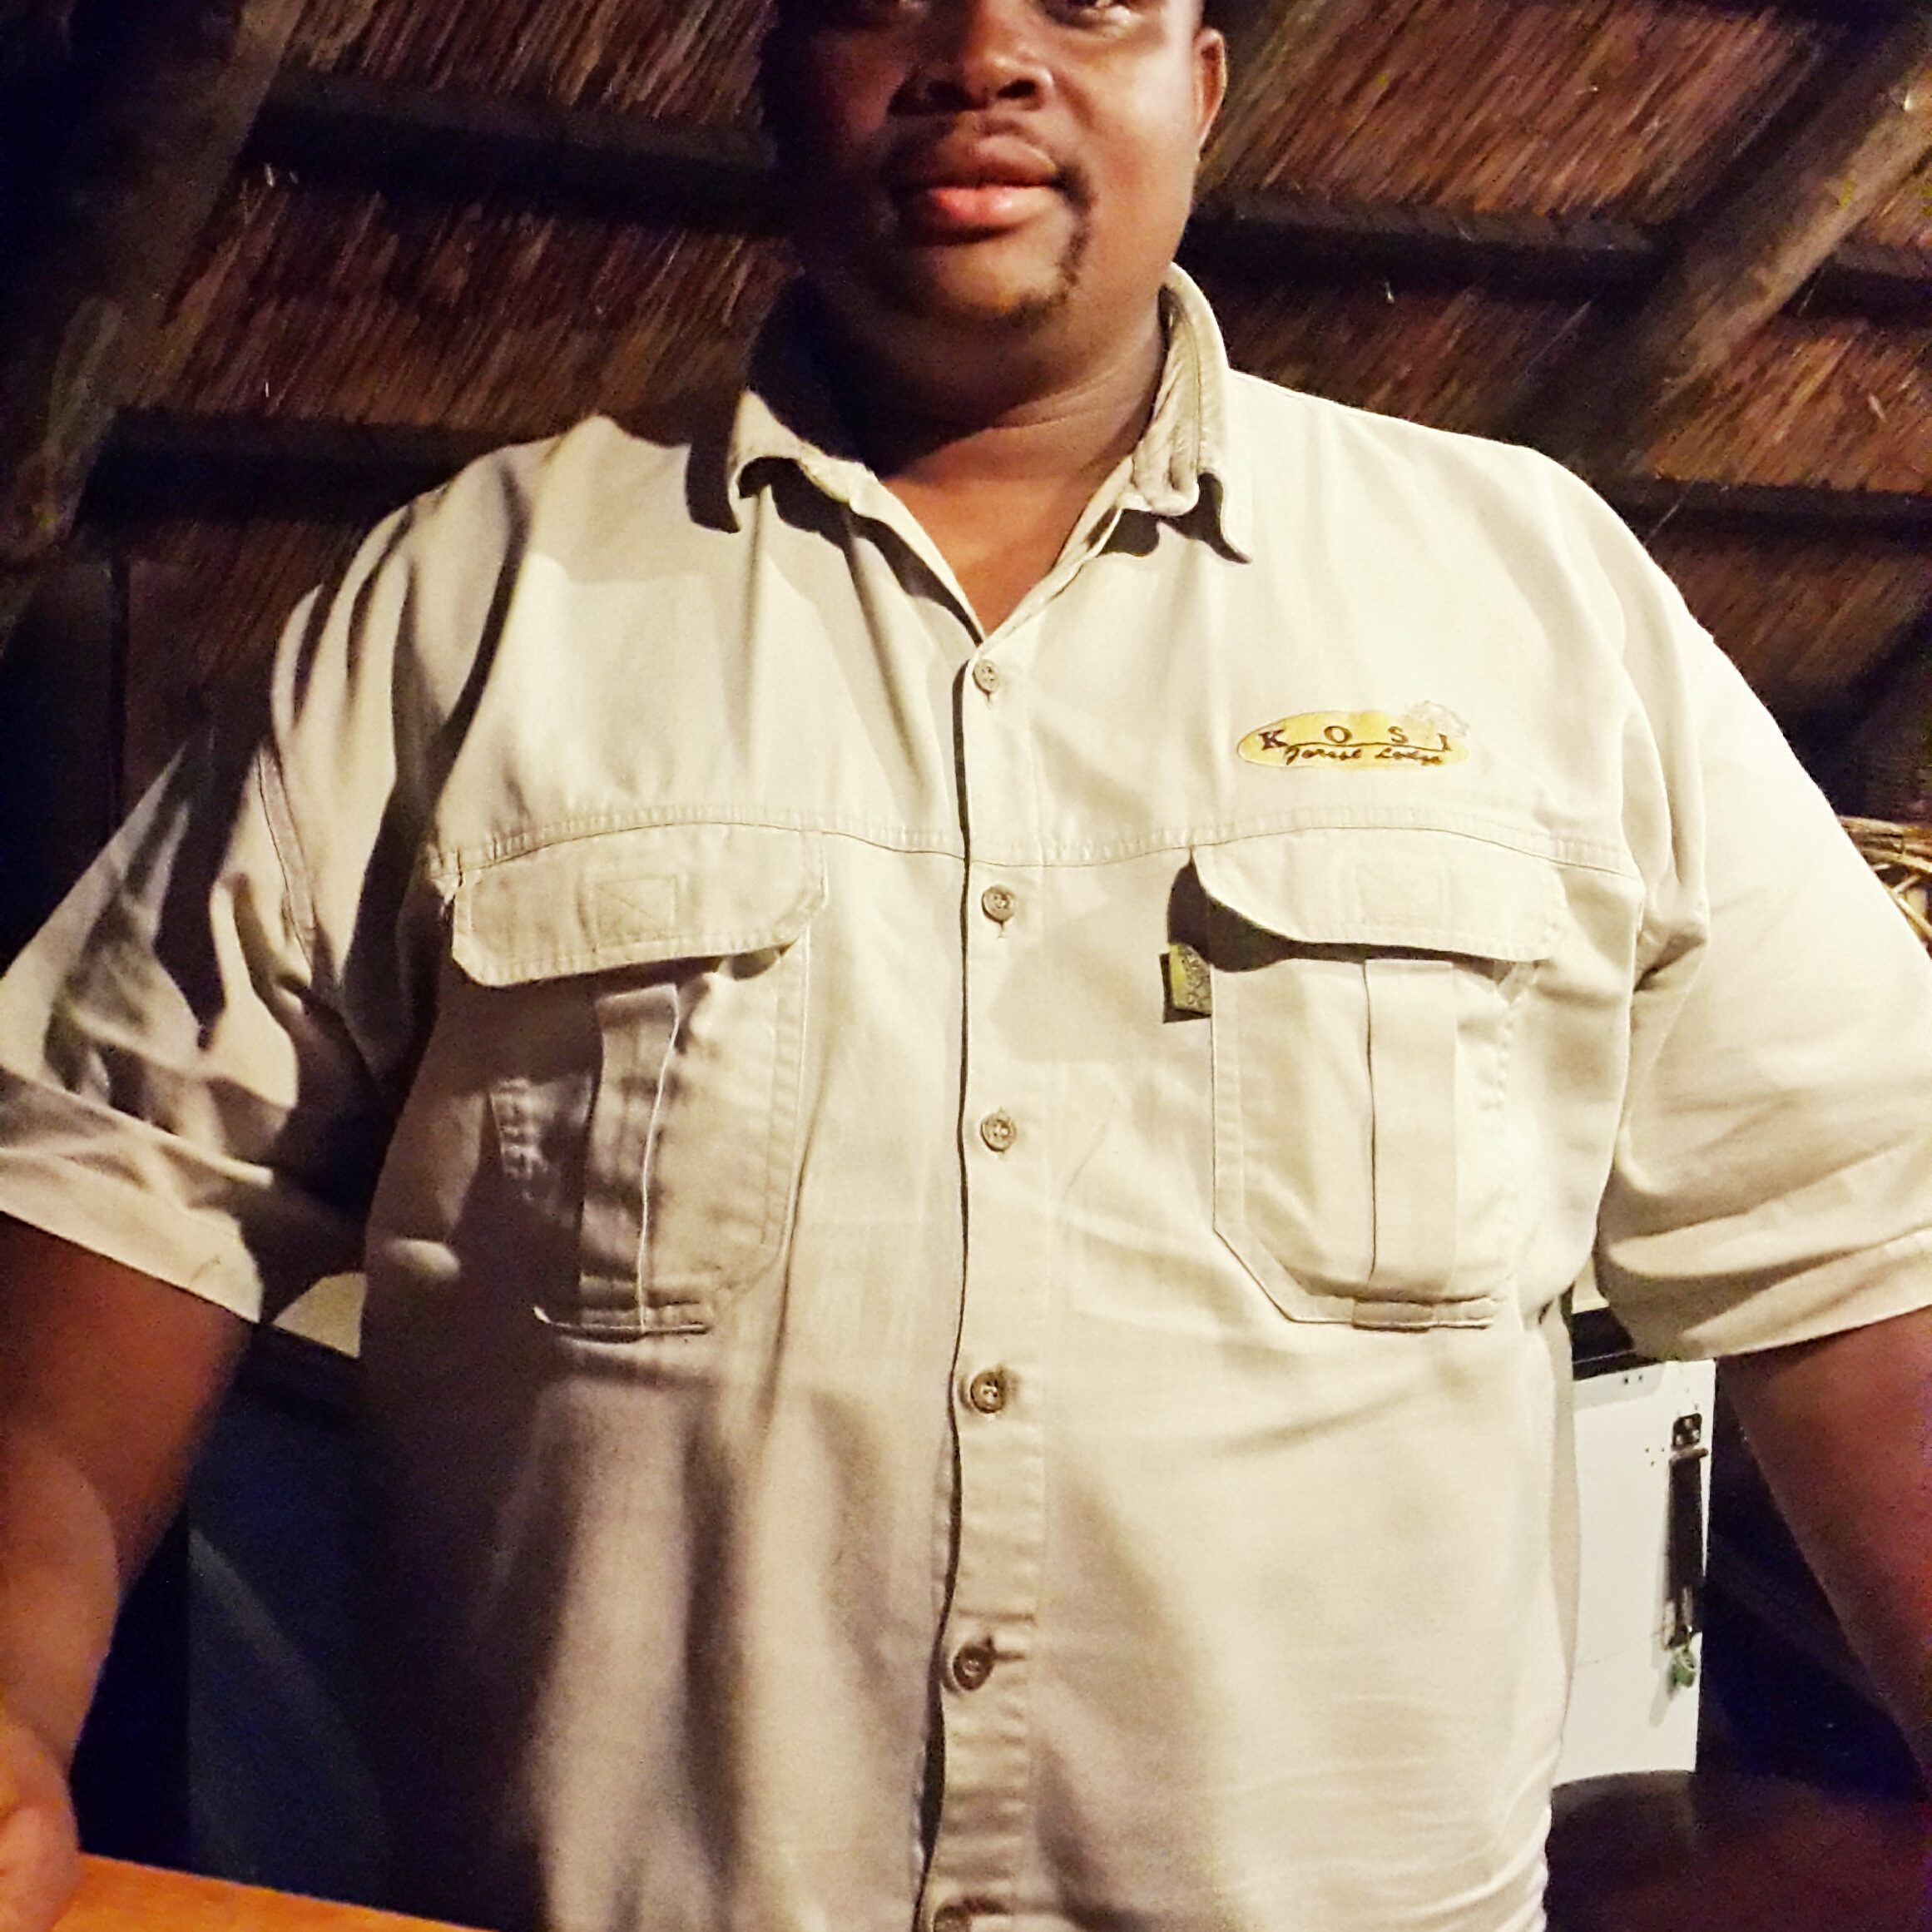 Sibusiso (Blessing) Mngomezulu, Lodge Manager of Kosi Forest Lodge